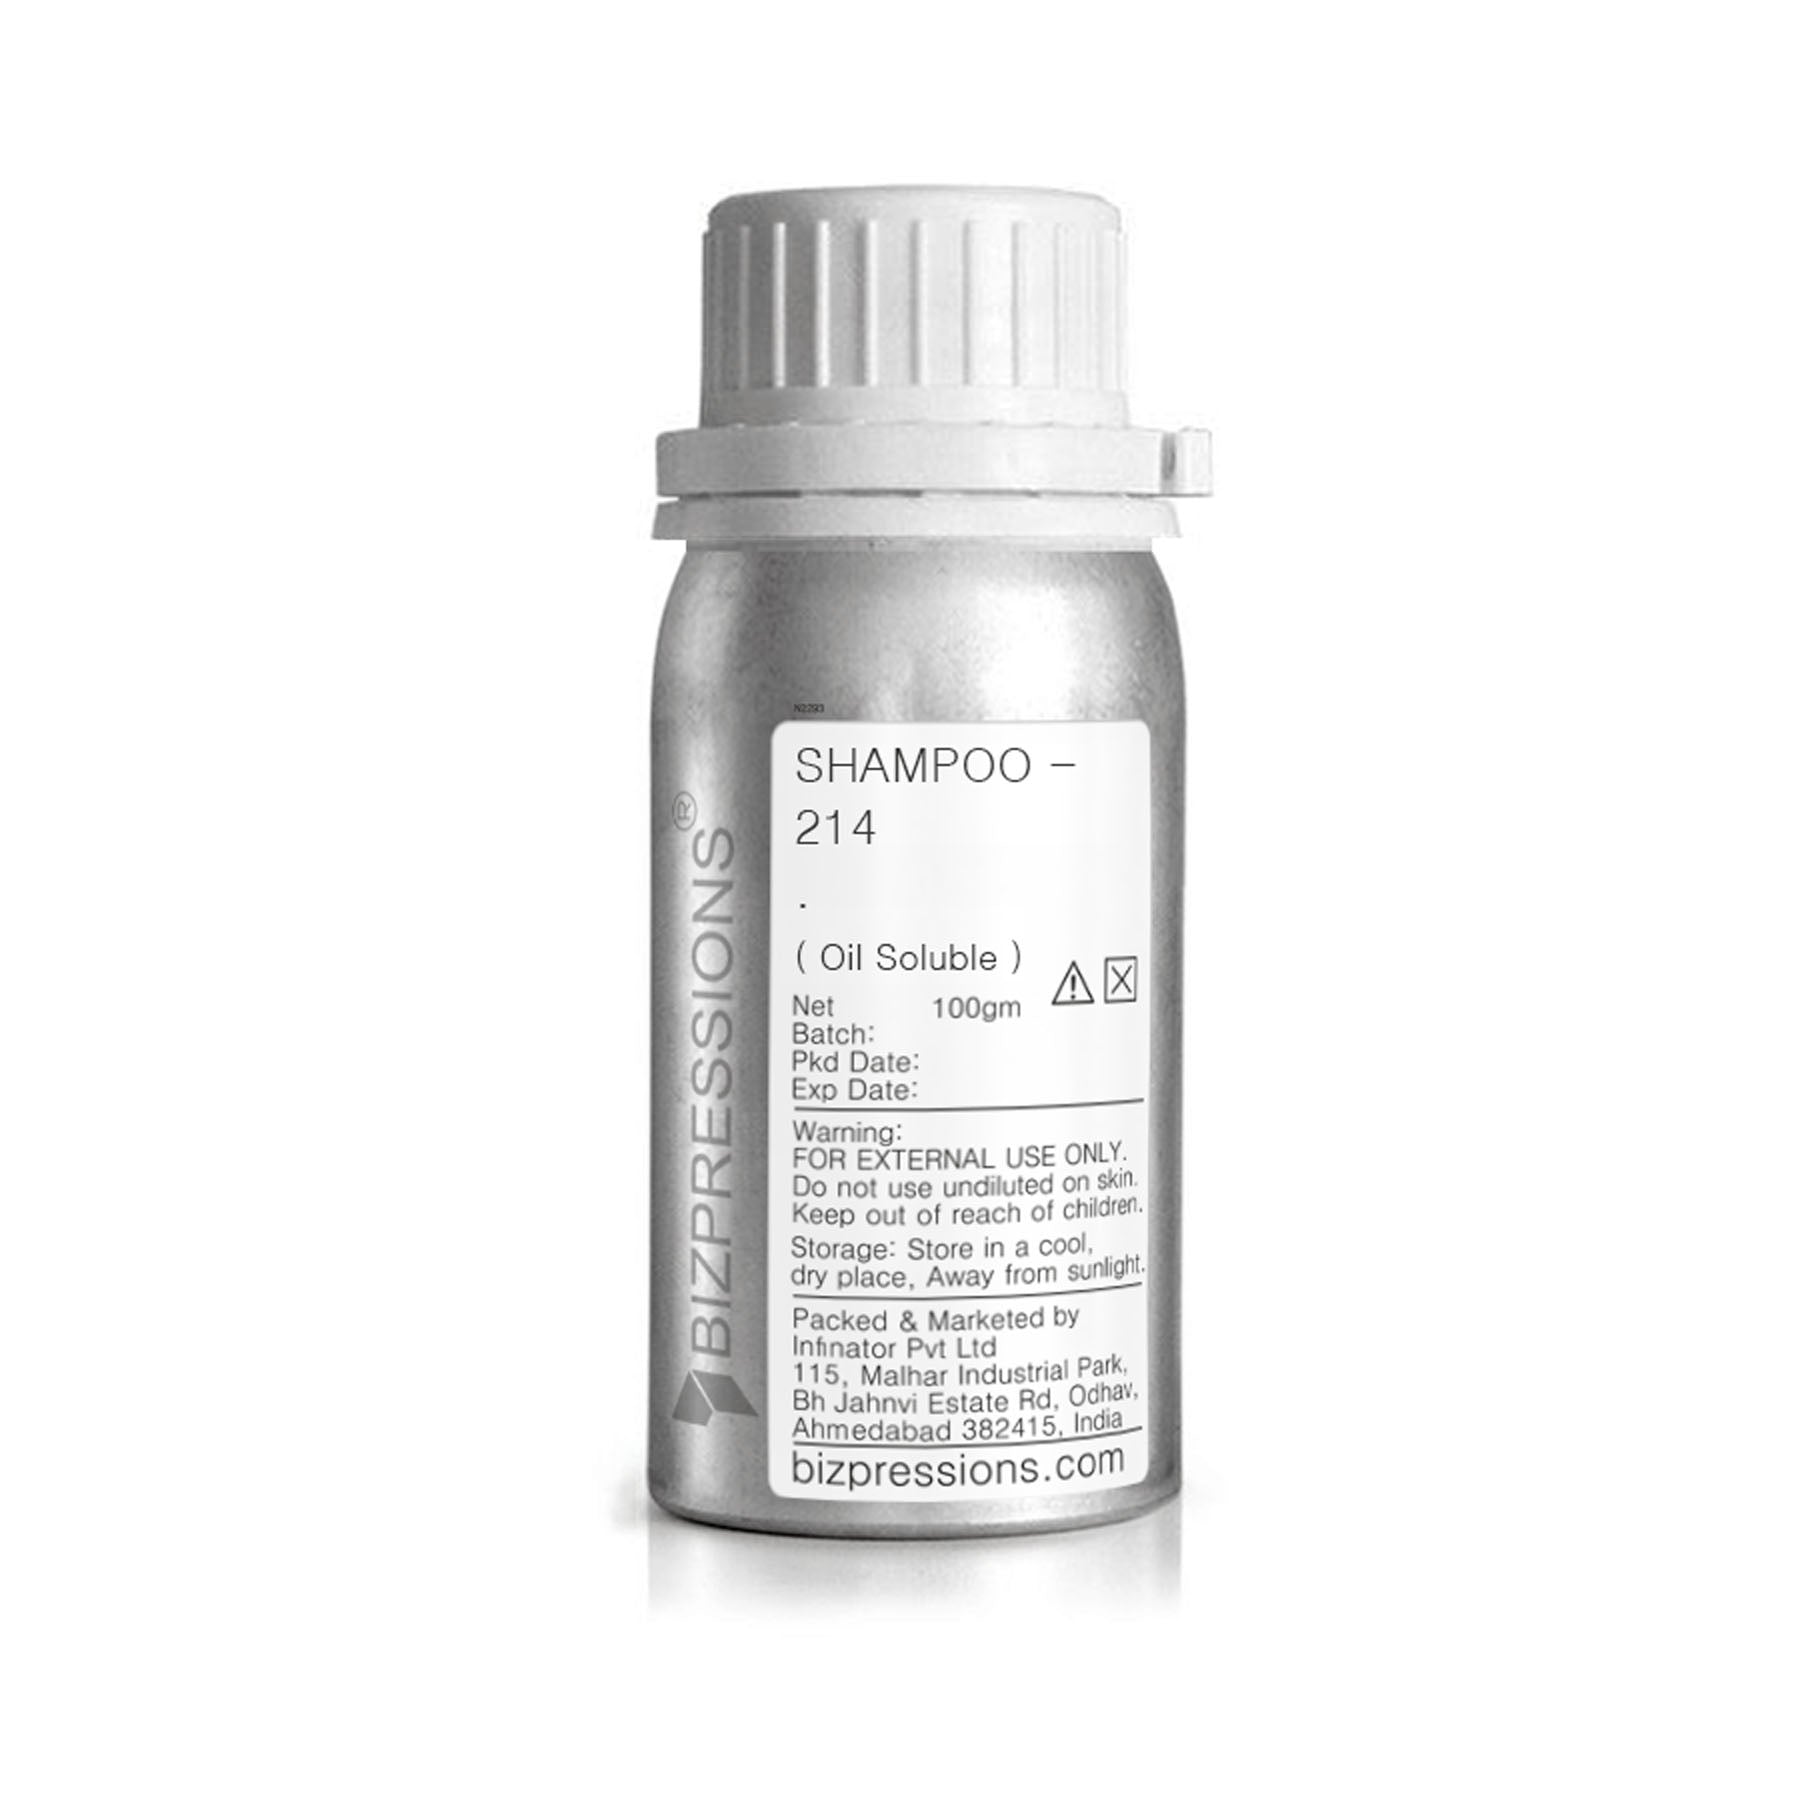 SHAMPOO - 214 - Fragrance ( Oil Soluble ) - 100 gm